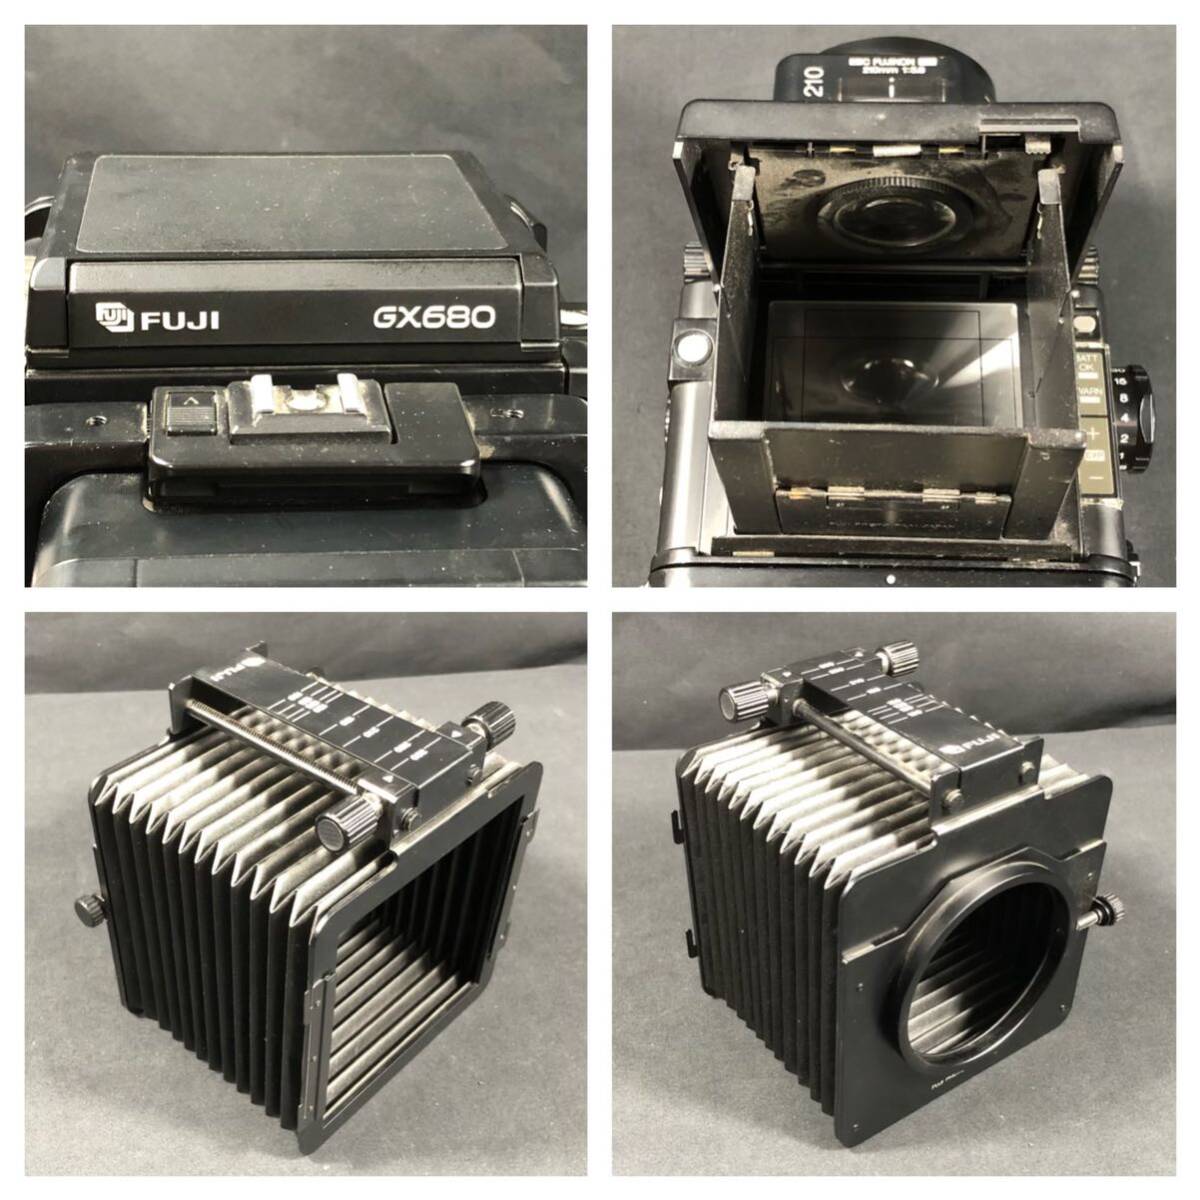 5/17a10 カメラ 現状品 FUJI GX680 Professional 6×8 210mm 1:5.6 フジ 大判カメラ 本体 レンズ 蛇腹カメラ カメラ機器 アクセサリー _画像5